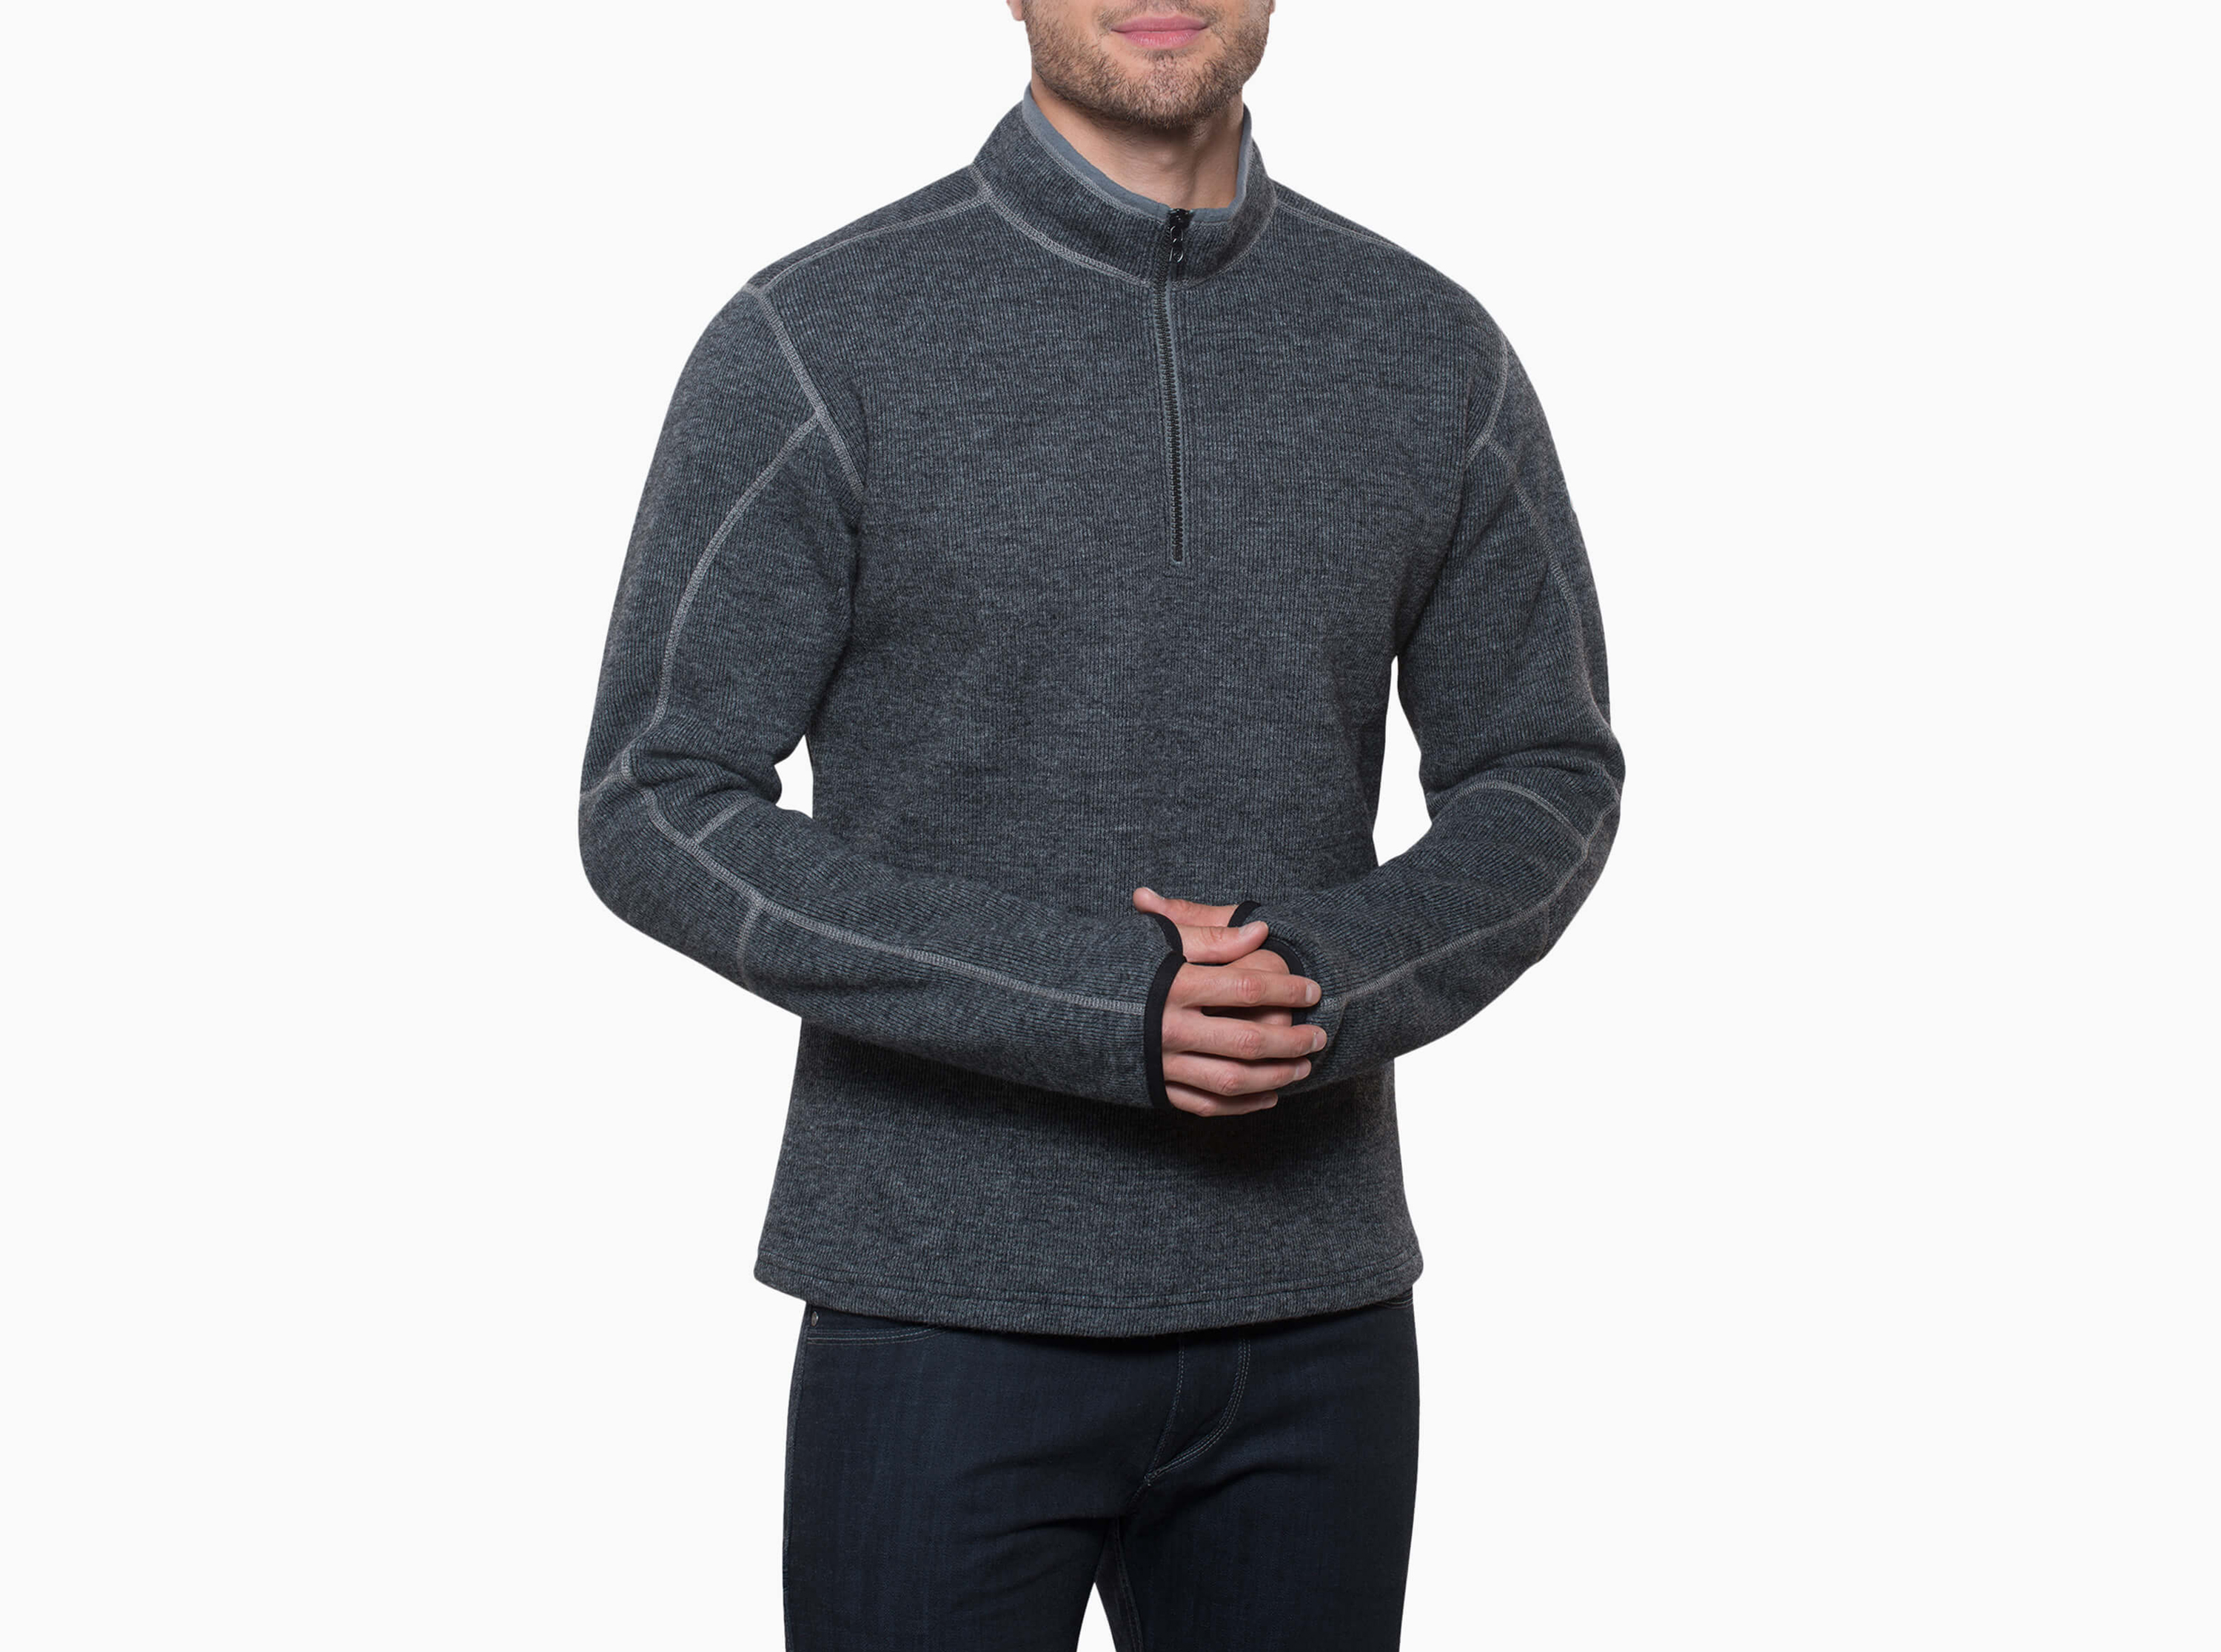 Vermont Gear - Farm-Way: Kuhl Men's Thor™ FZ Sweater